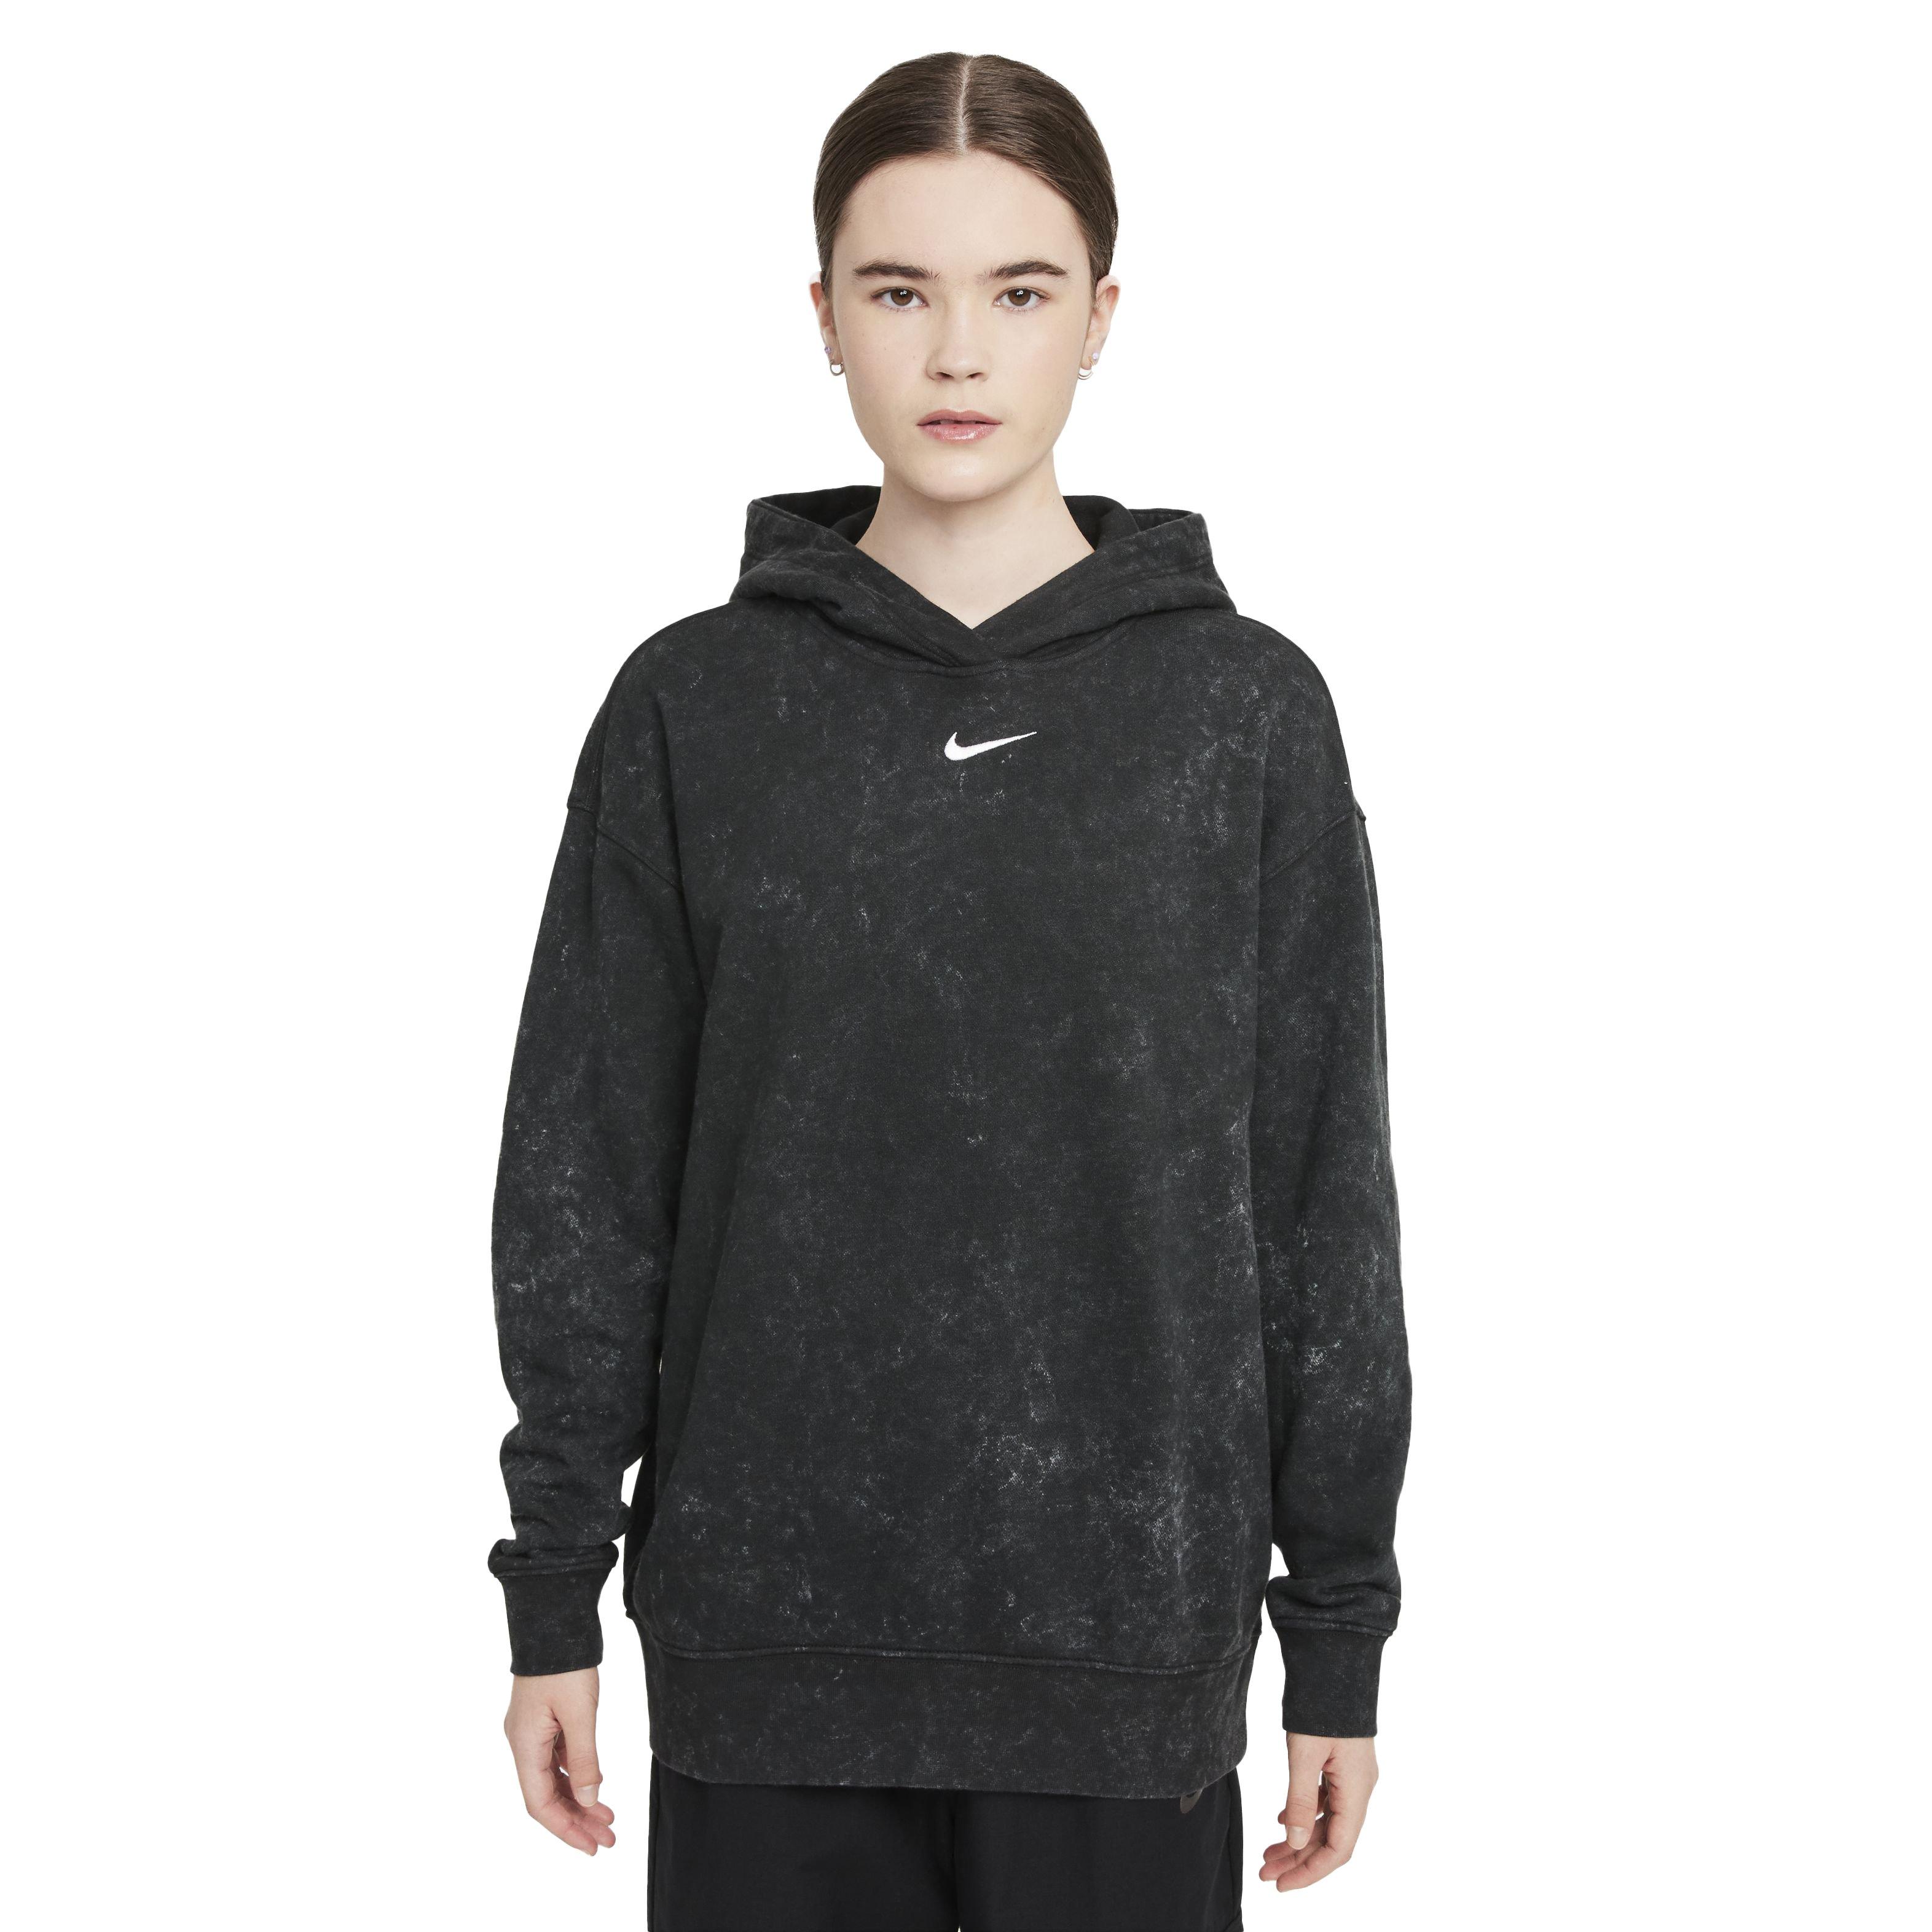 Nike Sweatshirt - Sweat Femme Nike Sportswear Essential (Noir) - Vêtements  chez Sarenza (405662)